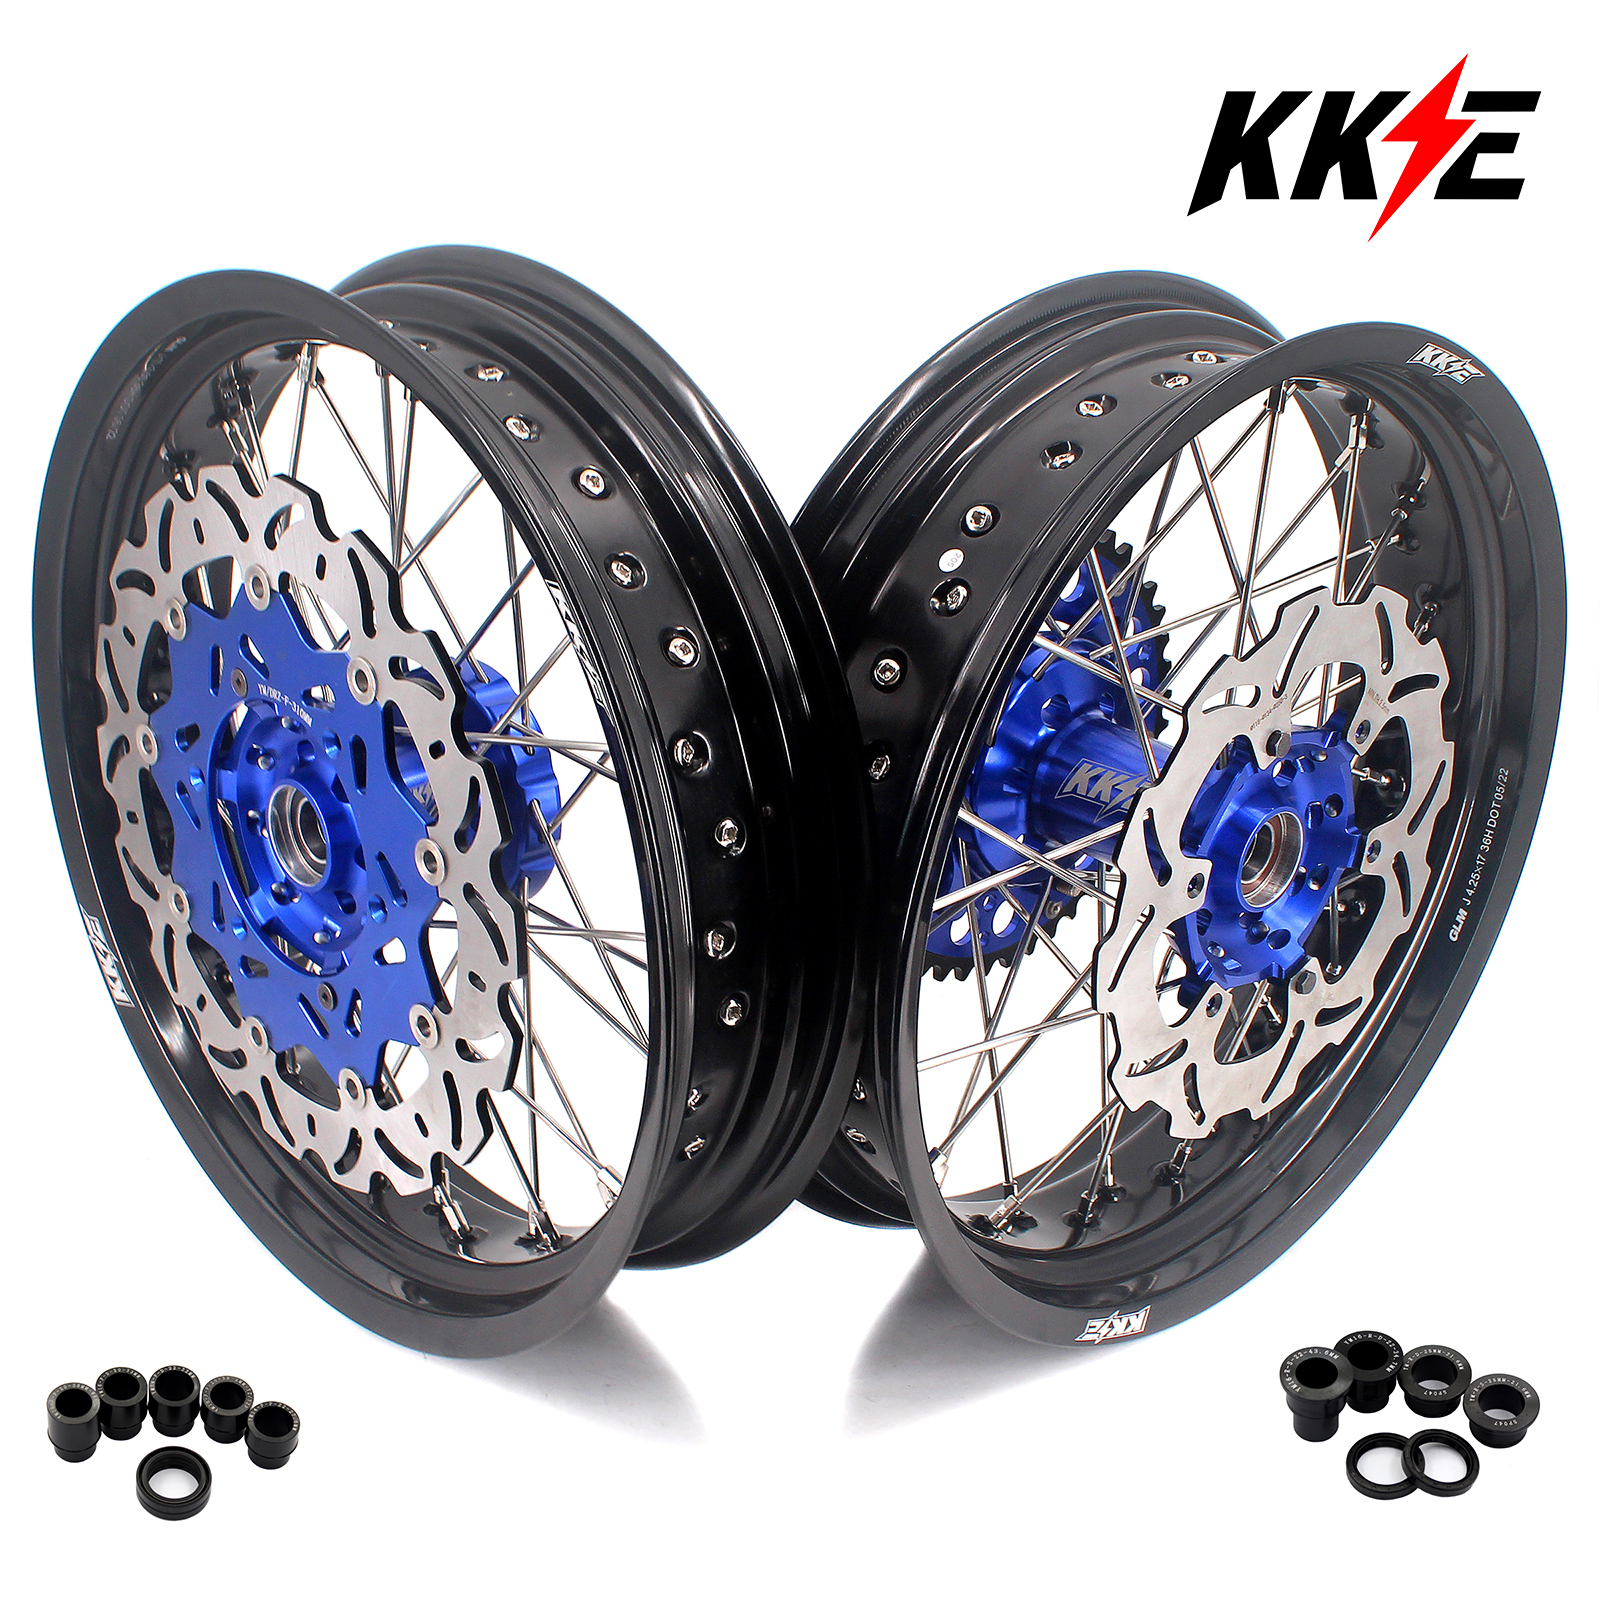 KKE 3.5*17/4.25*17 Supermoto Wheels Set With CST Tire Fit YAMAHA